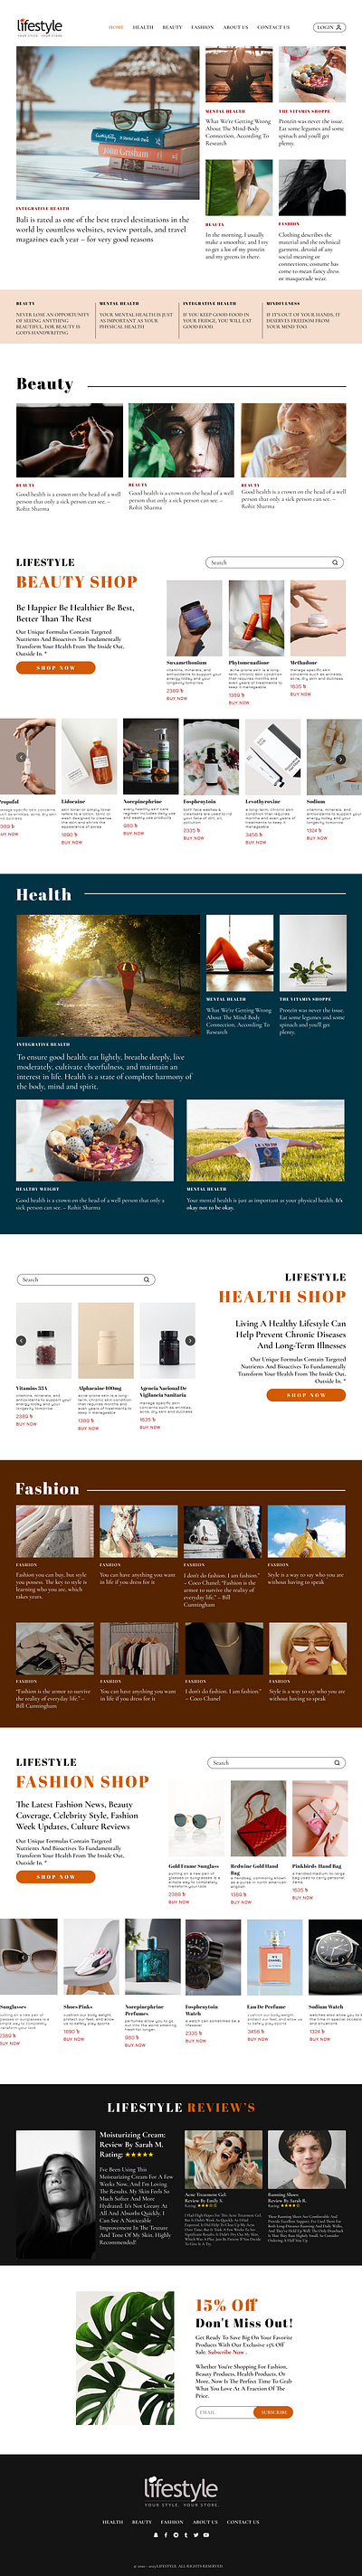 LifeStyle Website Design fashio lifestyle ui website